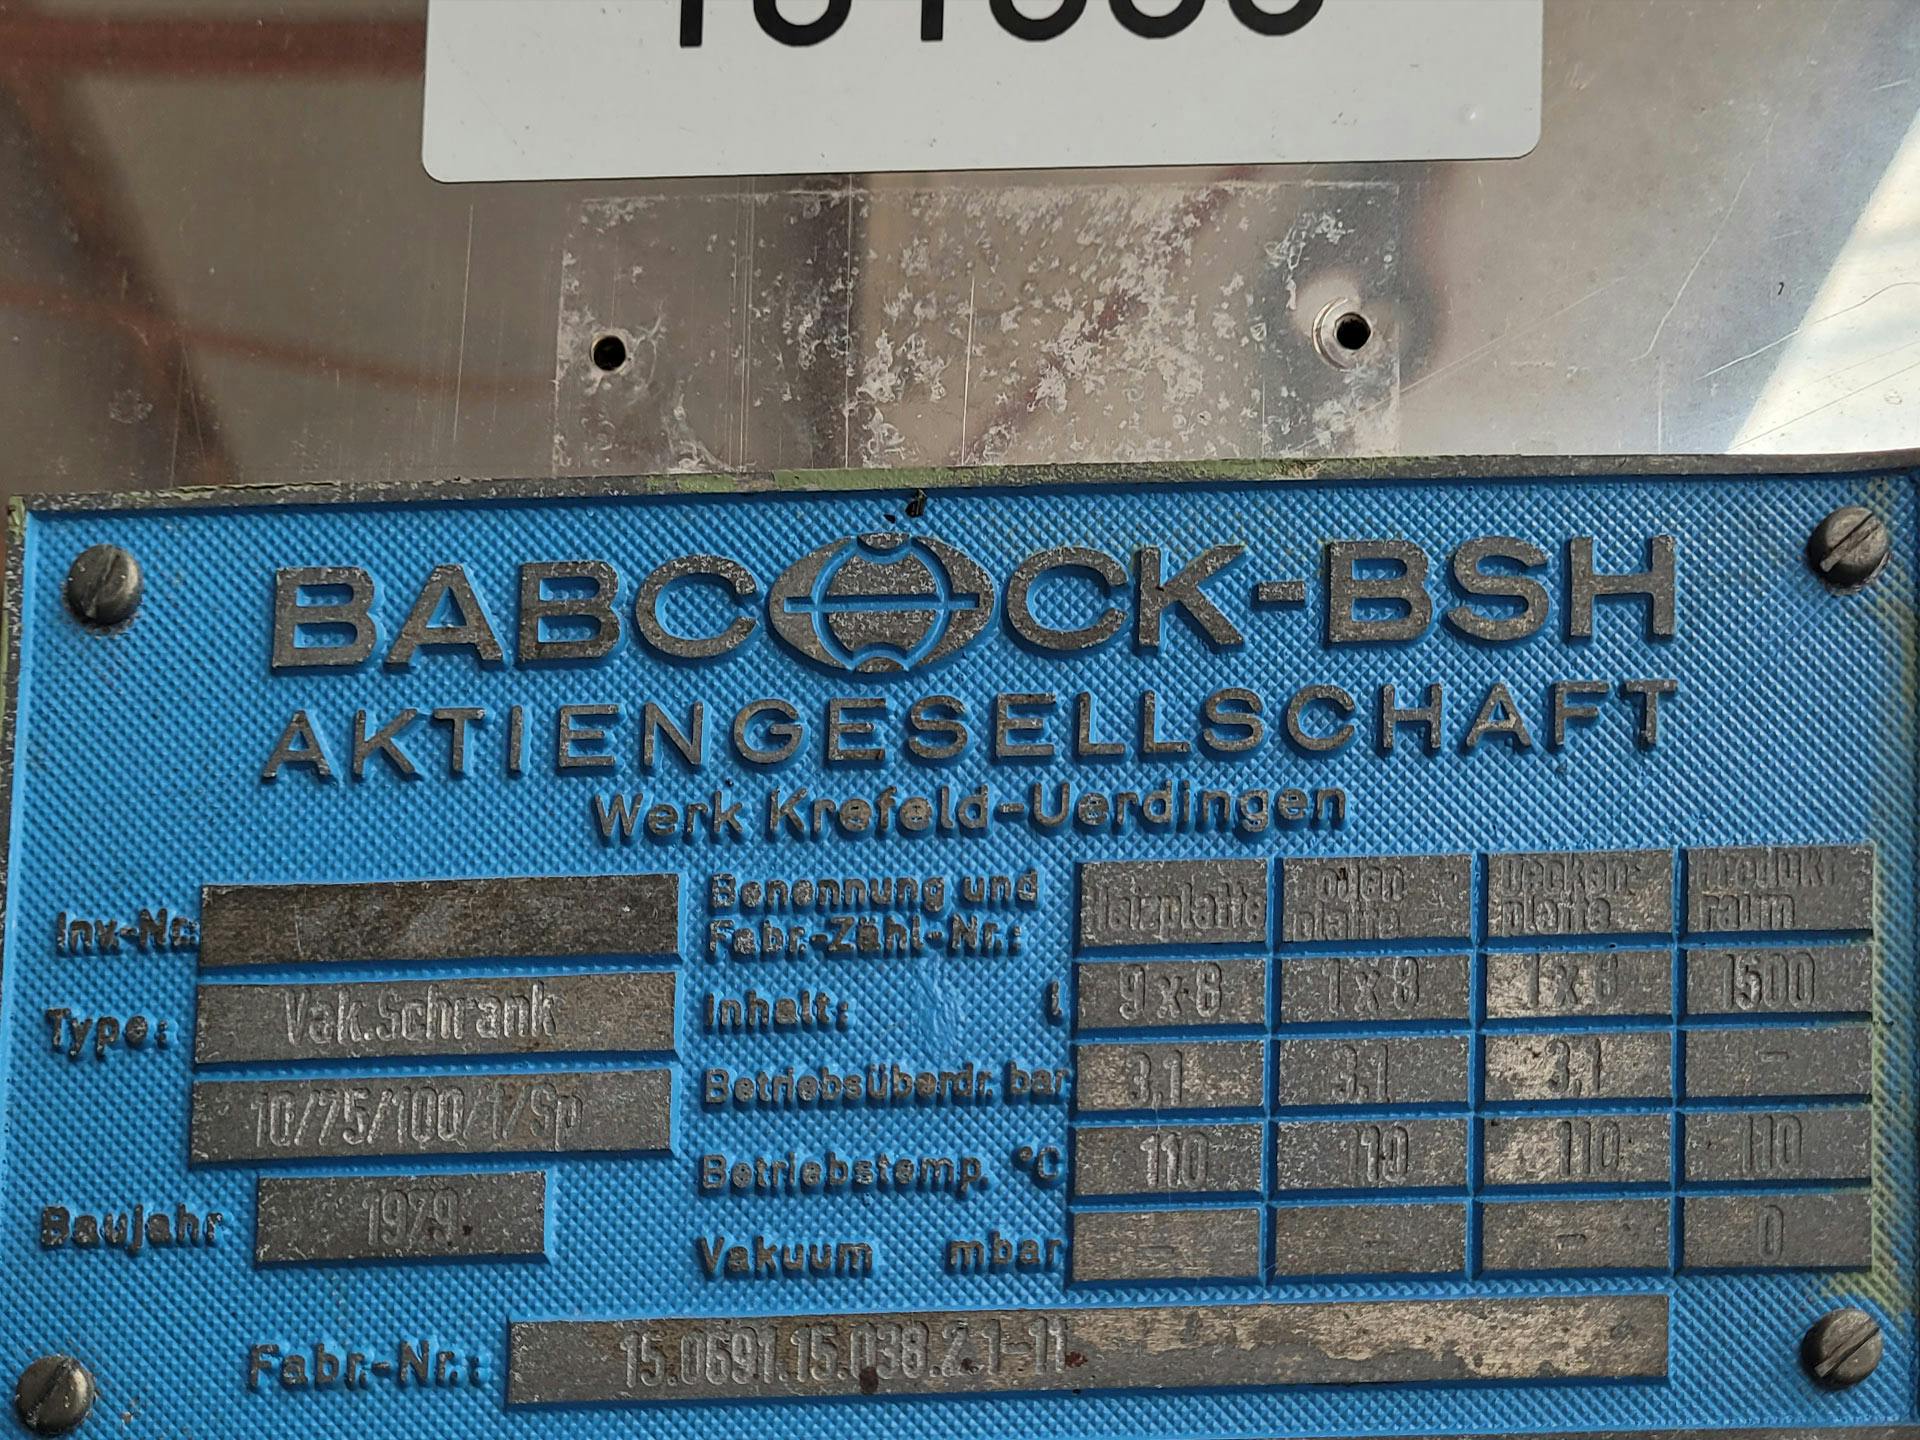 Babcock-BSH 10/75/100/1/SP - Essiccatore a vassoio - image 5